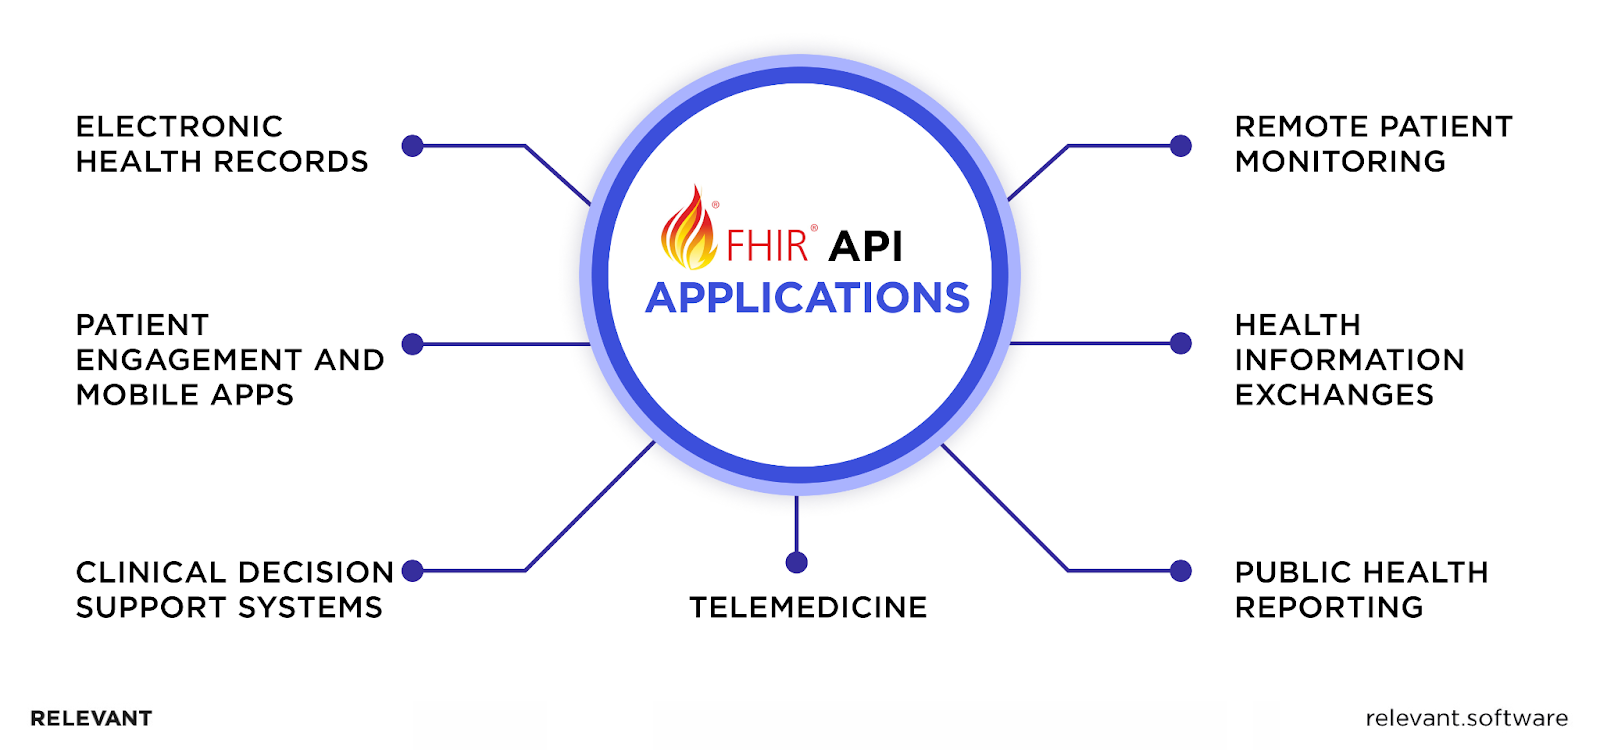 Applications of FHIR APIs